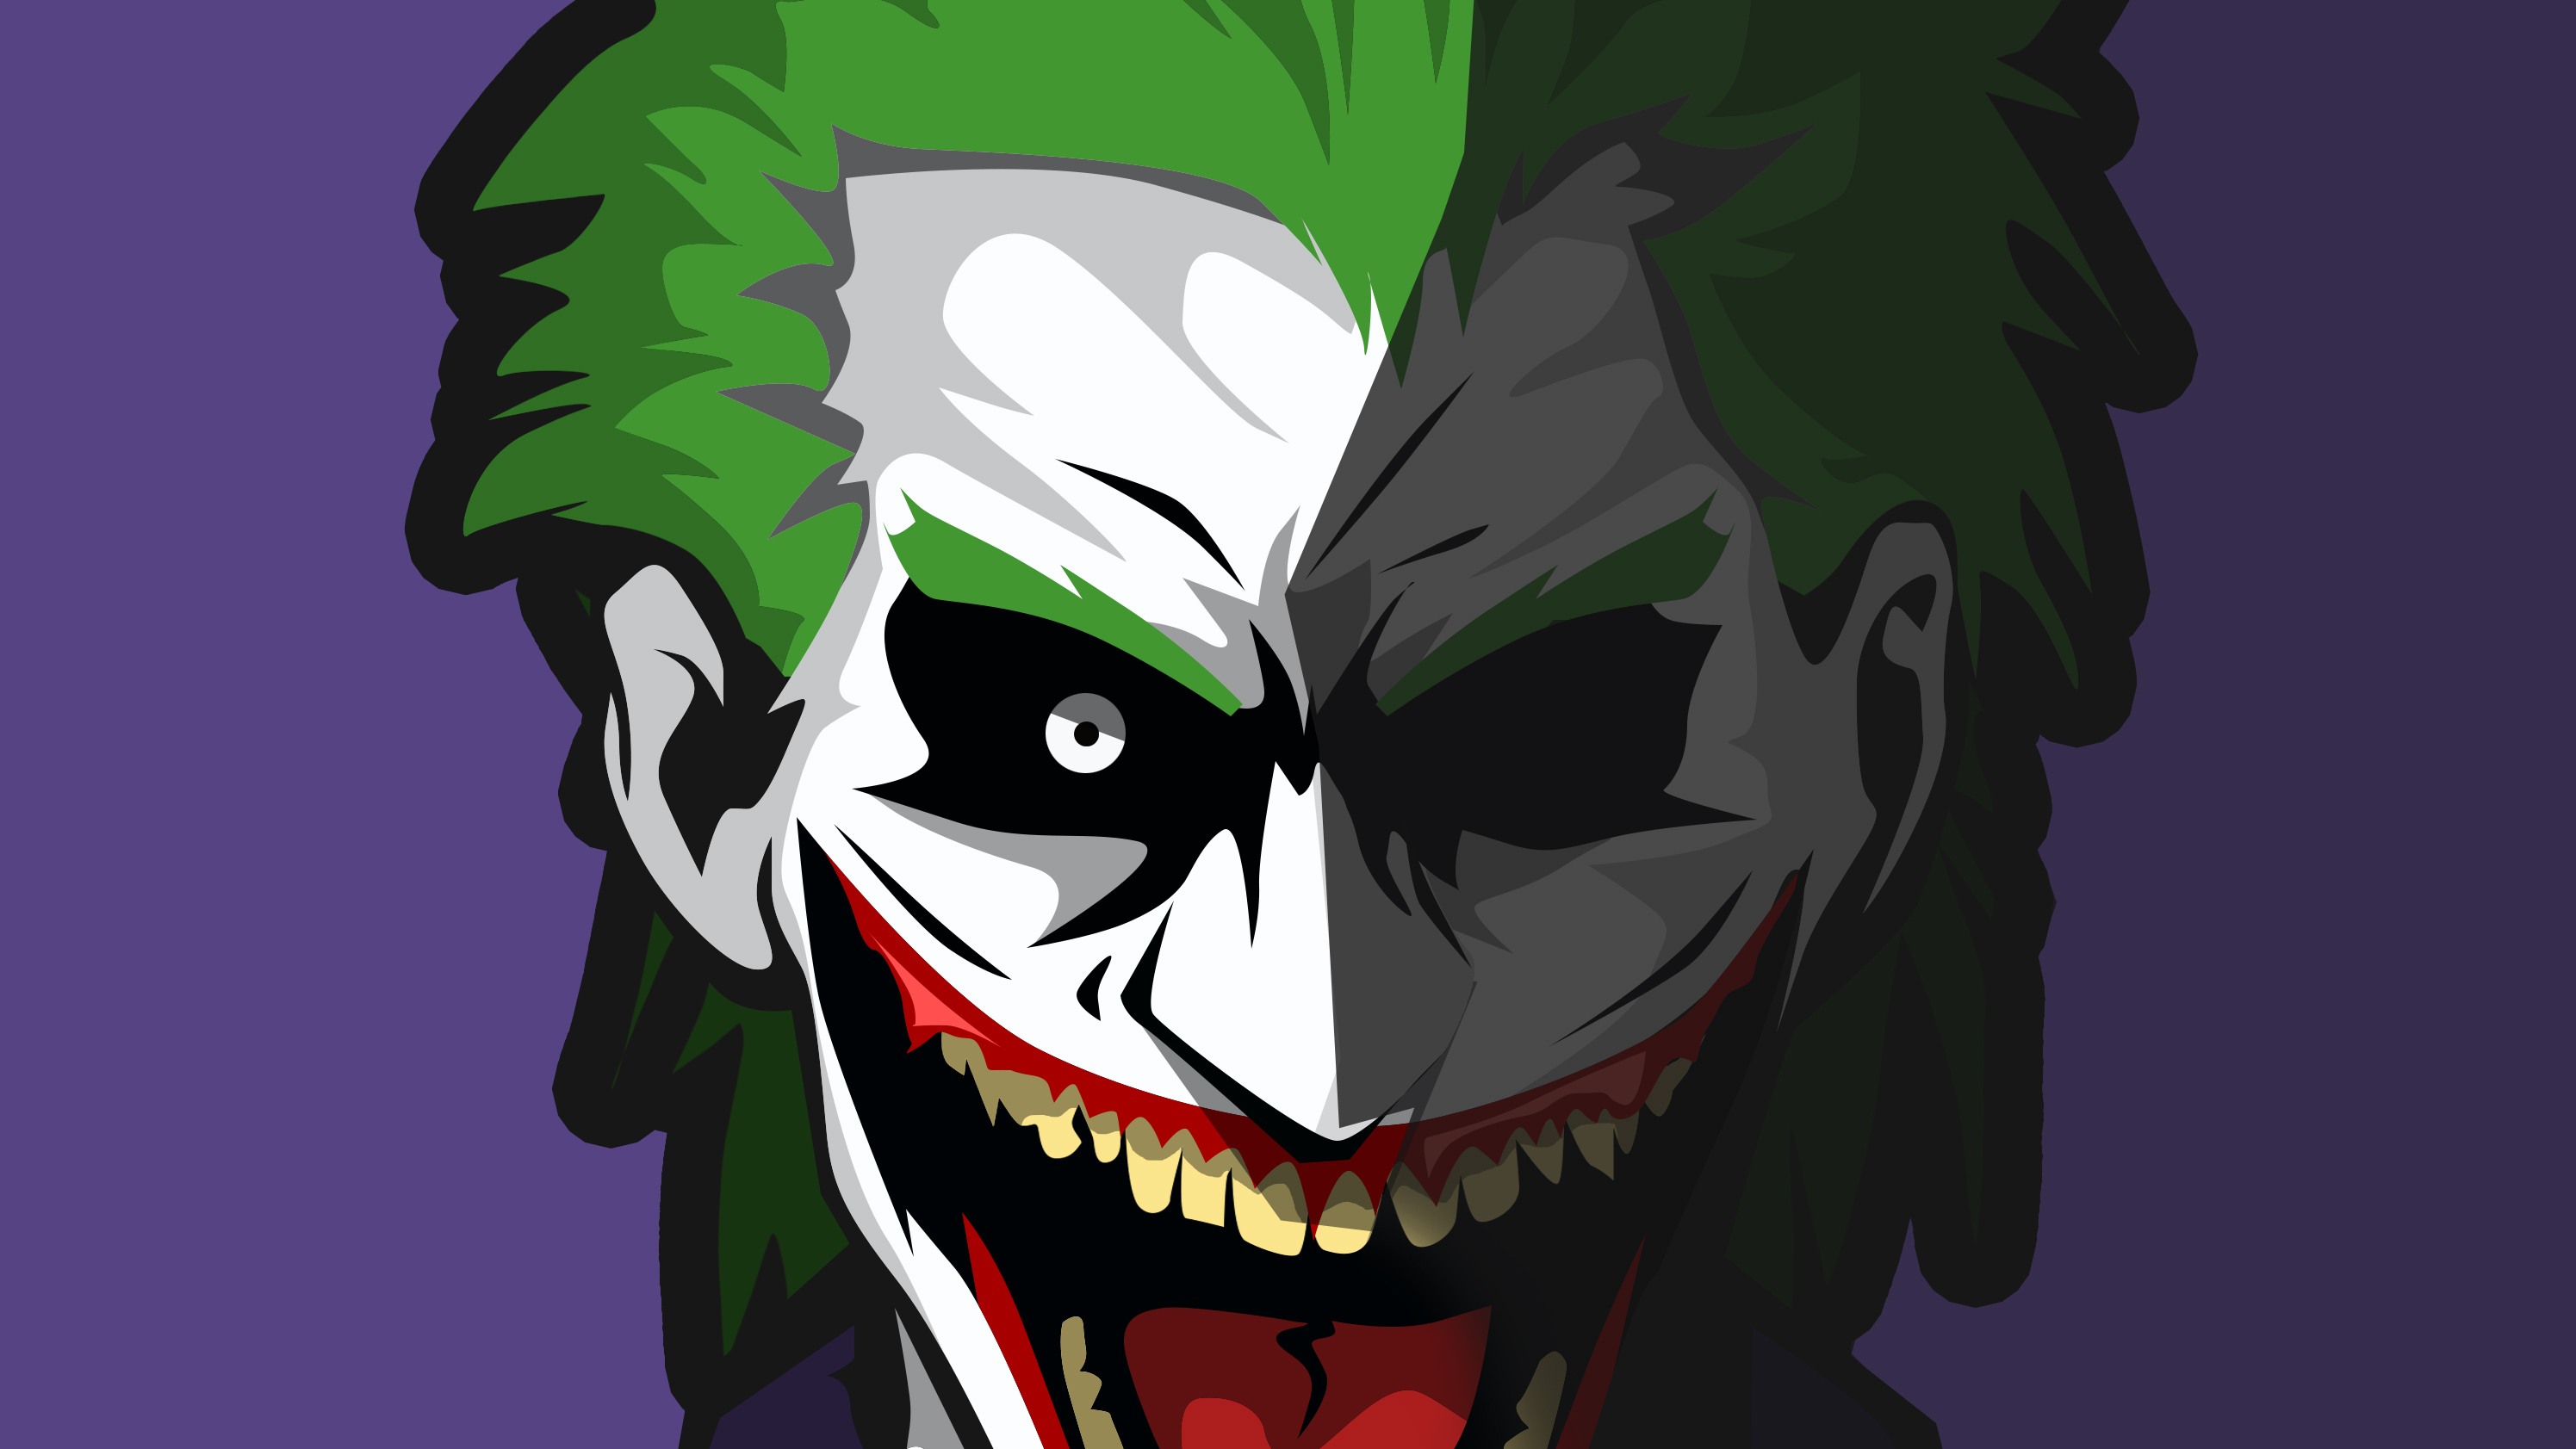 Joker Digital Art, HD Superheroes, 4k Wallpapers, Images, Backgrounds ...